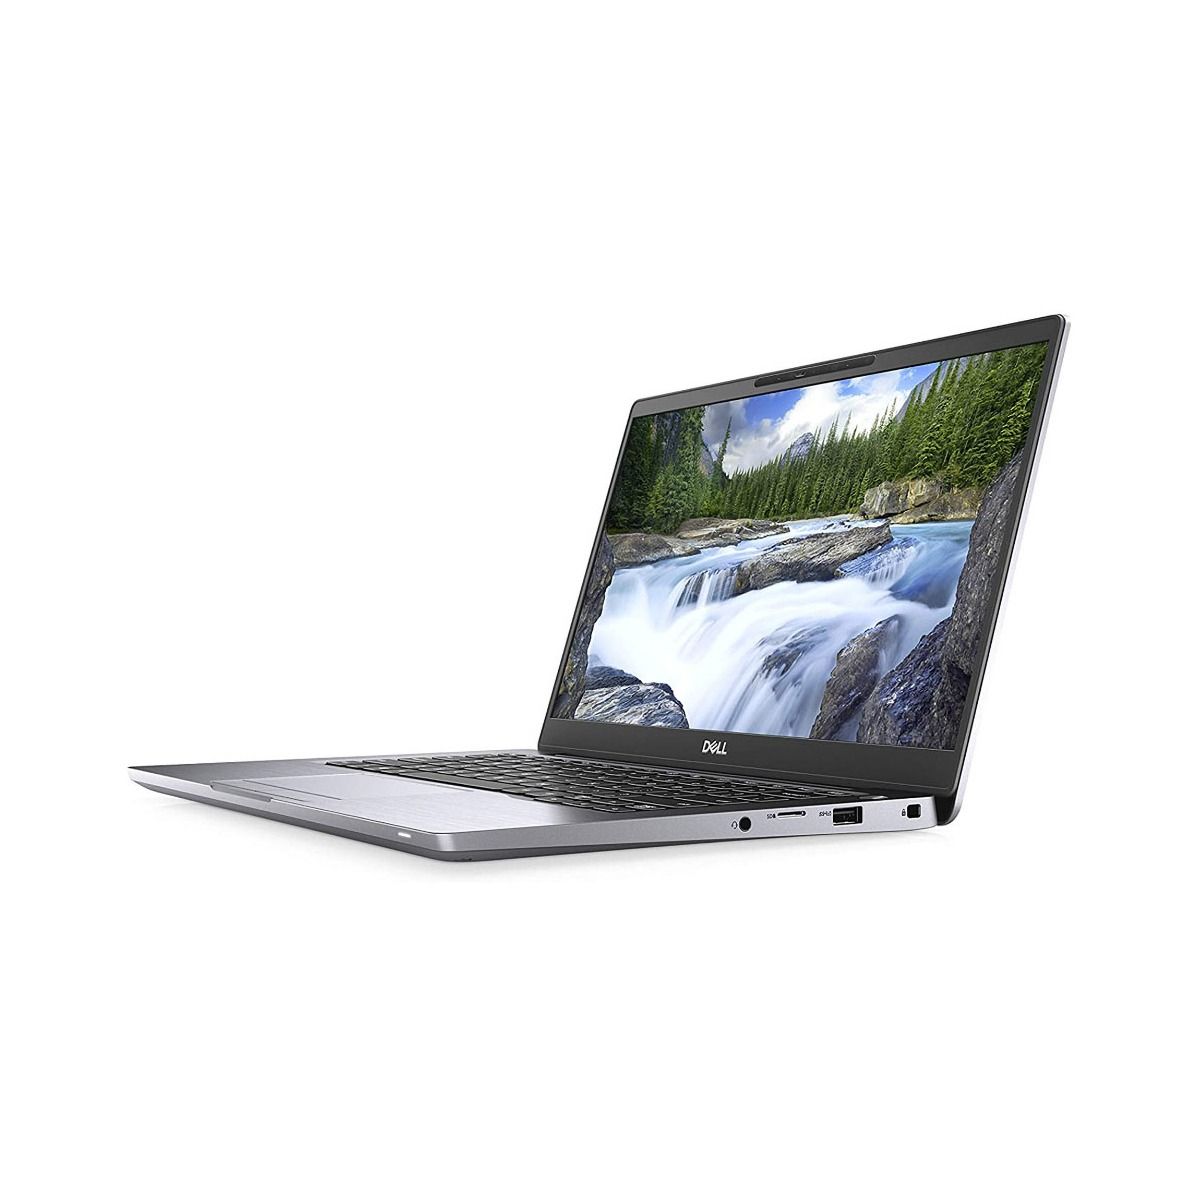 Dell Latitude 13 7300 Business Laptop Intel i7 8th Gen 16G RAM 256GB SSD Grey